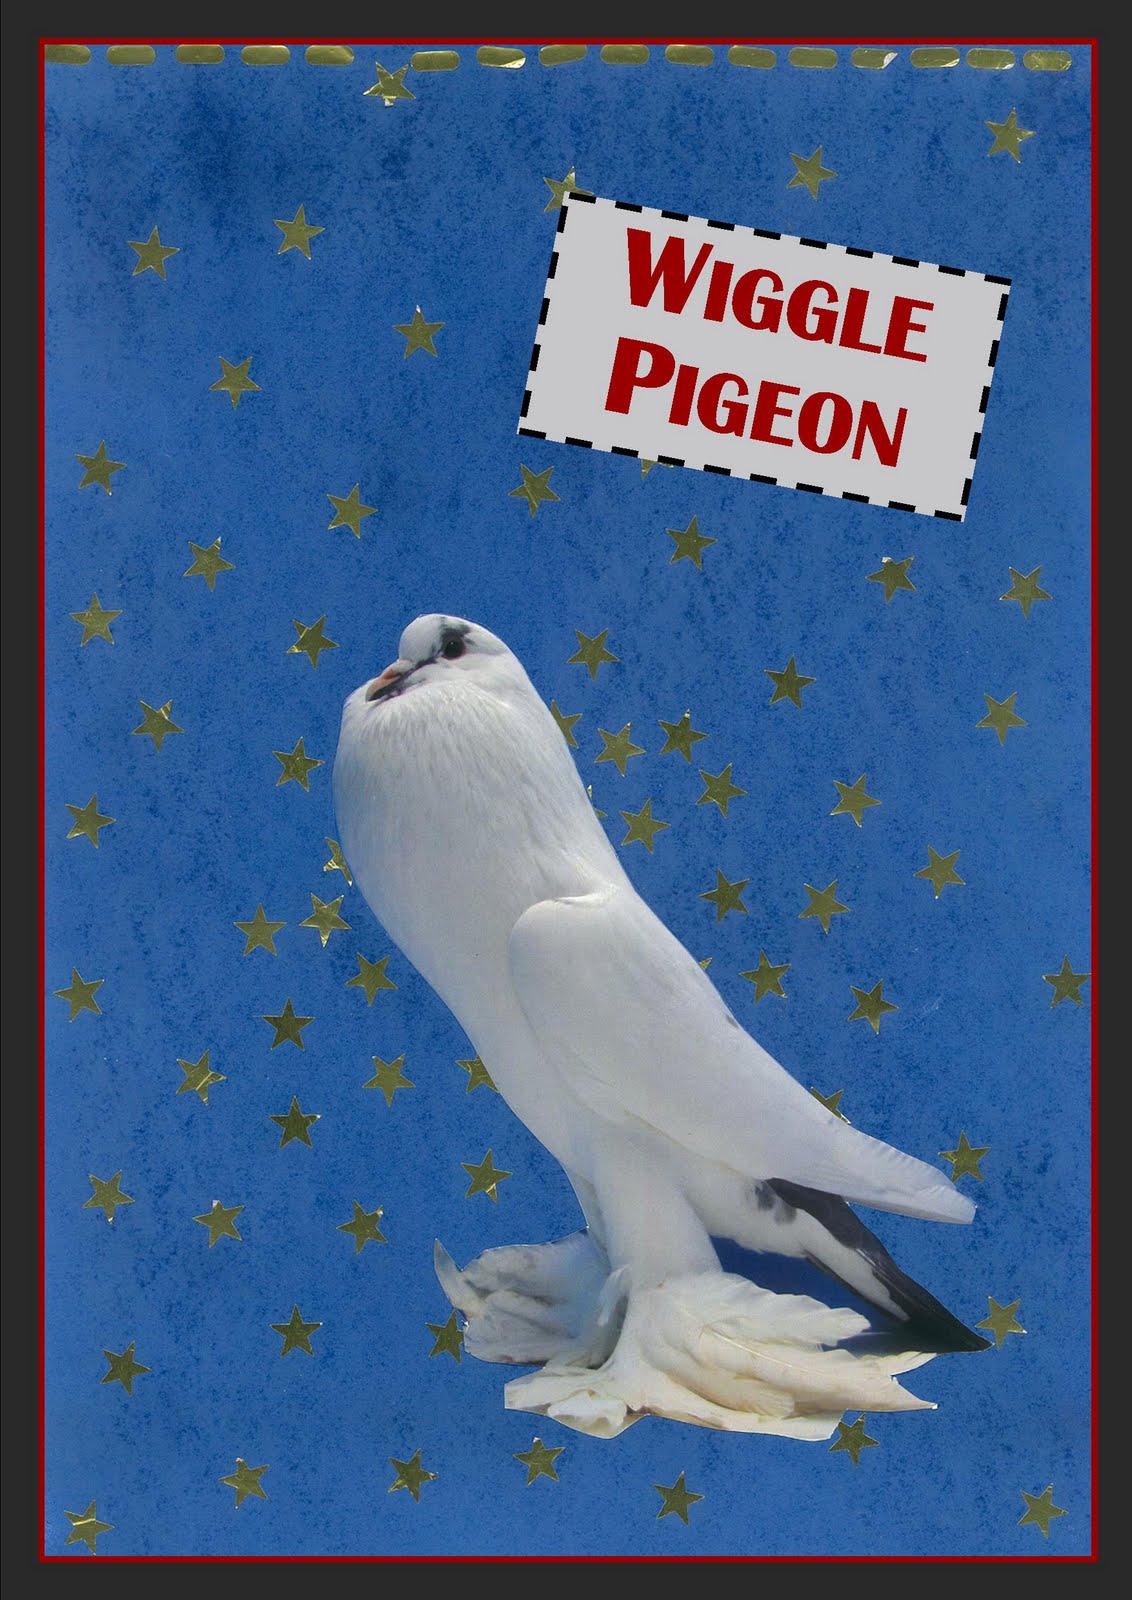 Wiggle Pigeon